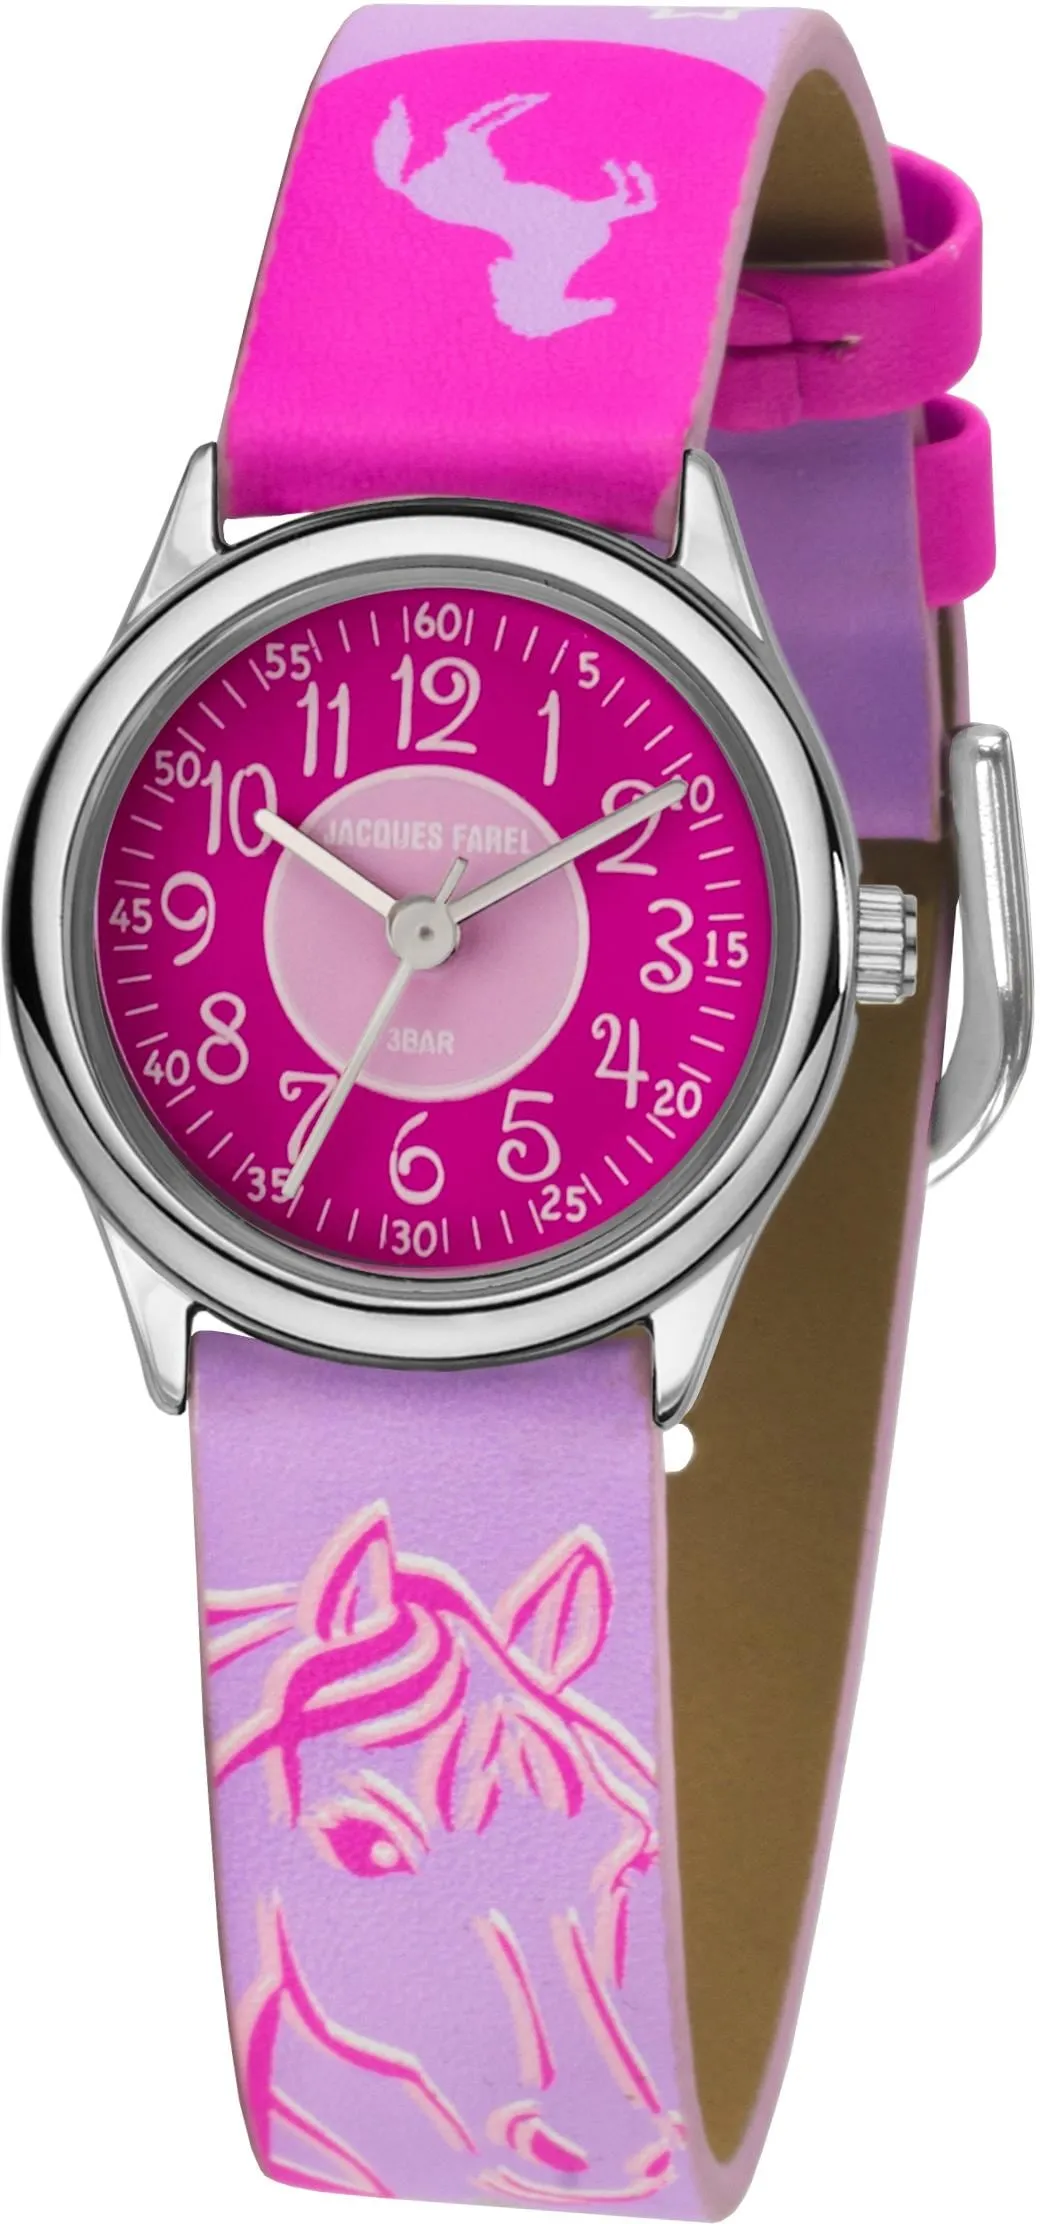 Quarzuhr JACQUES FAREL "Pferdeuhr, HCC 312" Armbanduhren pink (rosa, pink, weiß) Kinder Kinderuhren Armbanduhr, Kinderuhr, Mädchenuhr, Pferde, ideal auch als Geschenk